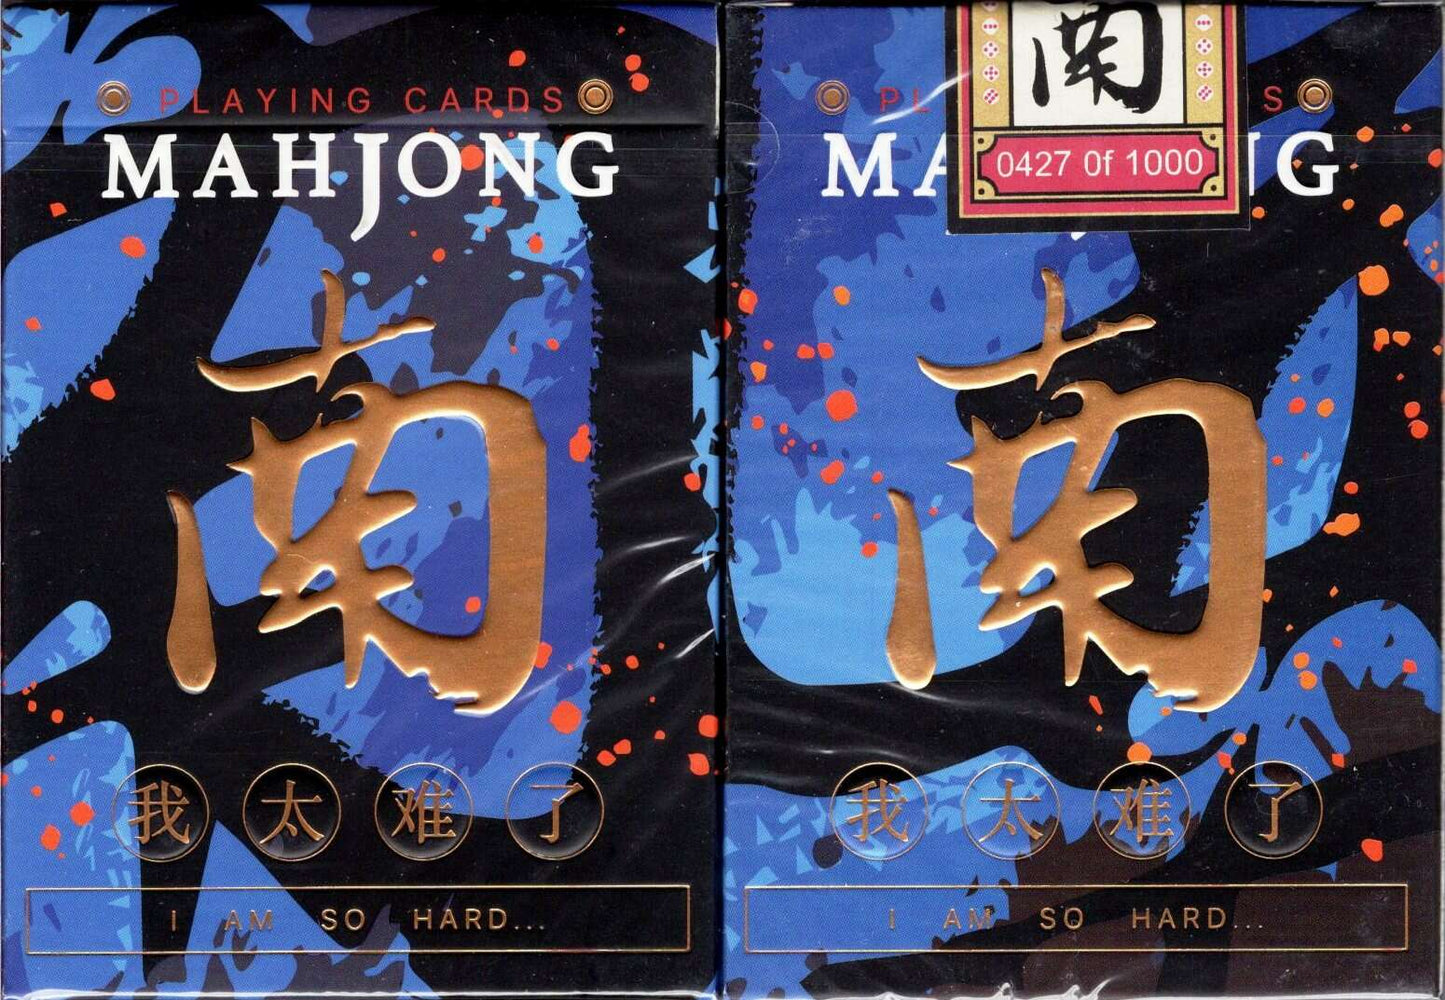 PlayingCardDecks.com-Mahjong Playing Cards: I am so hard